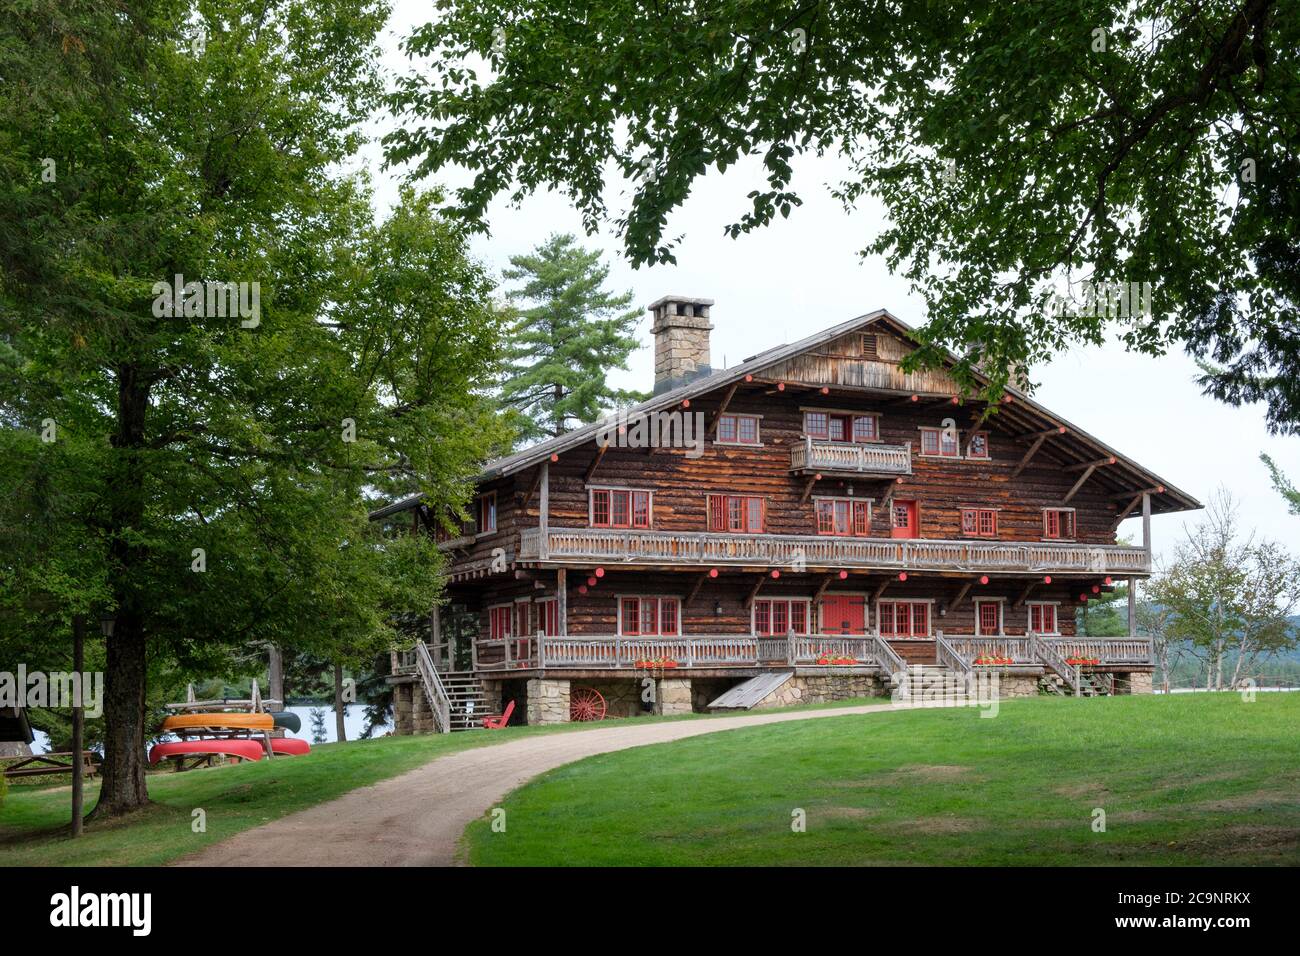 Main Lodge circa 1897, Great Camp Sagamore -former Vanderbilt Home, Adirondack Mountains, Raquette Lake, New York, USA Stock Photo